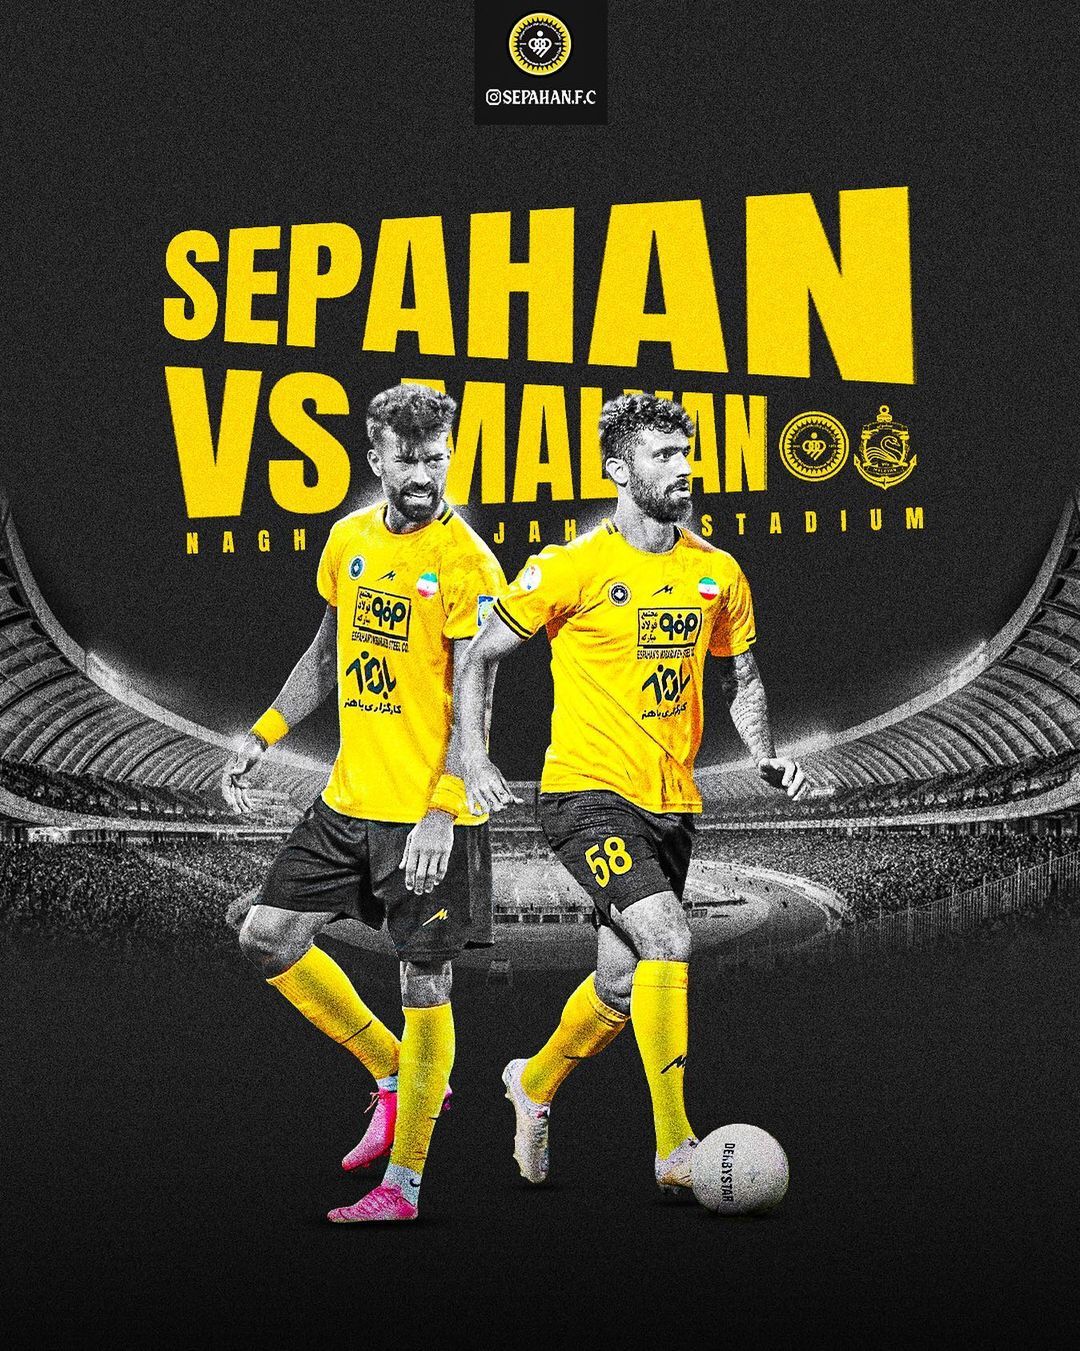 Sepahan S.C. - Soccer & Sports Background Wallpapers on Desktop